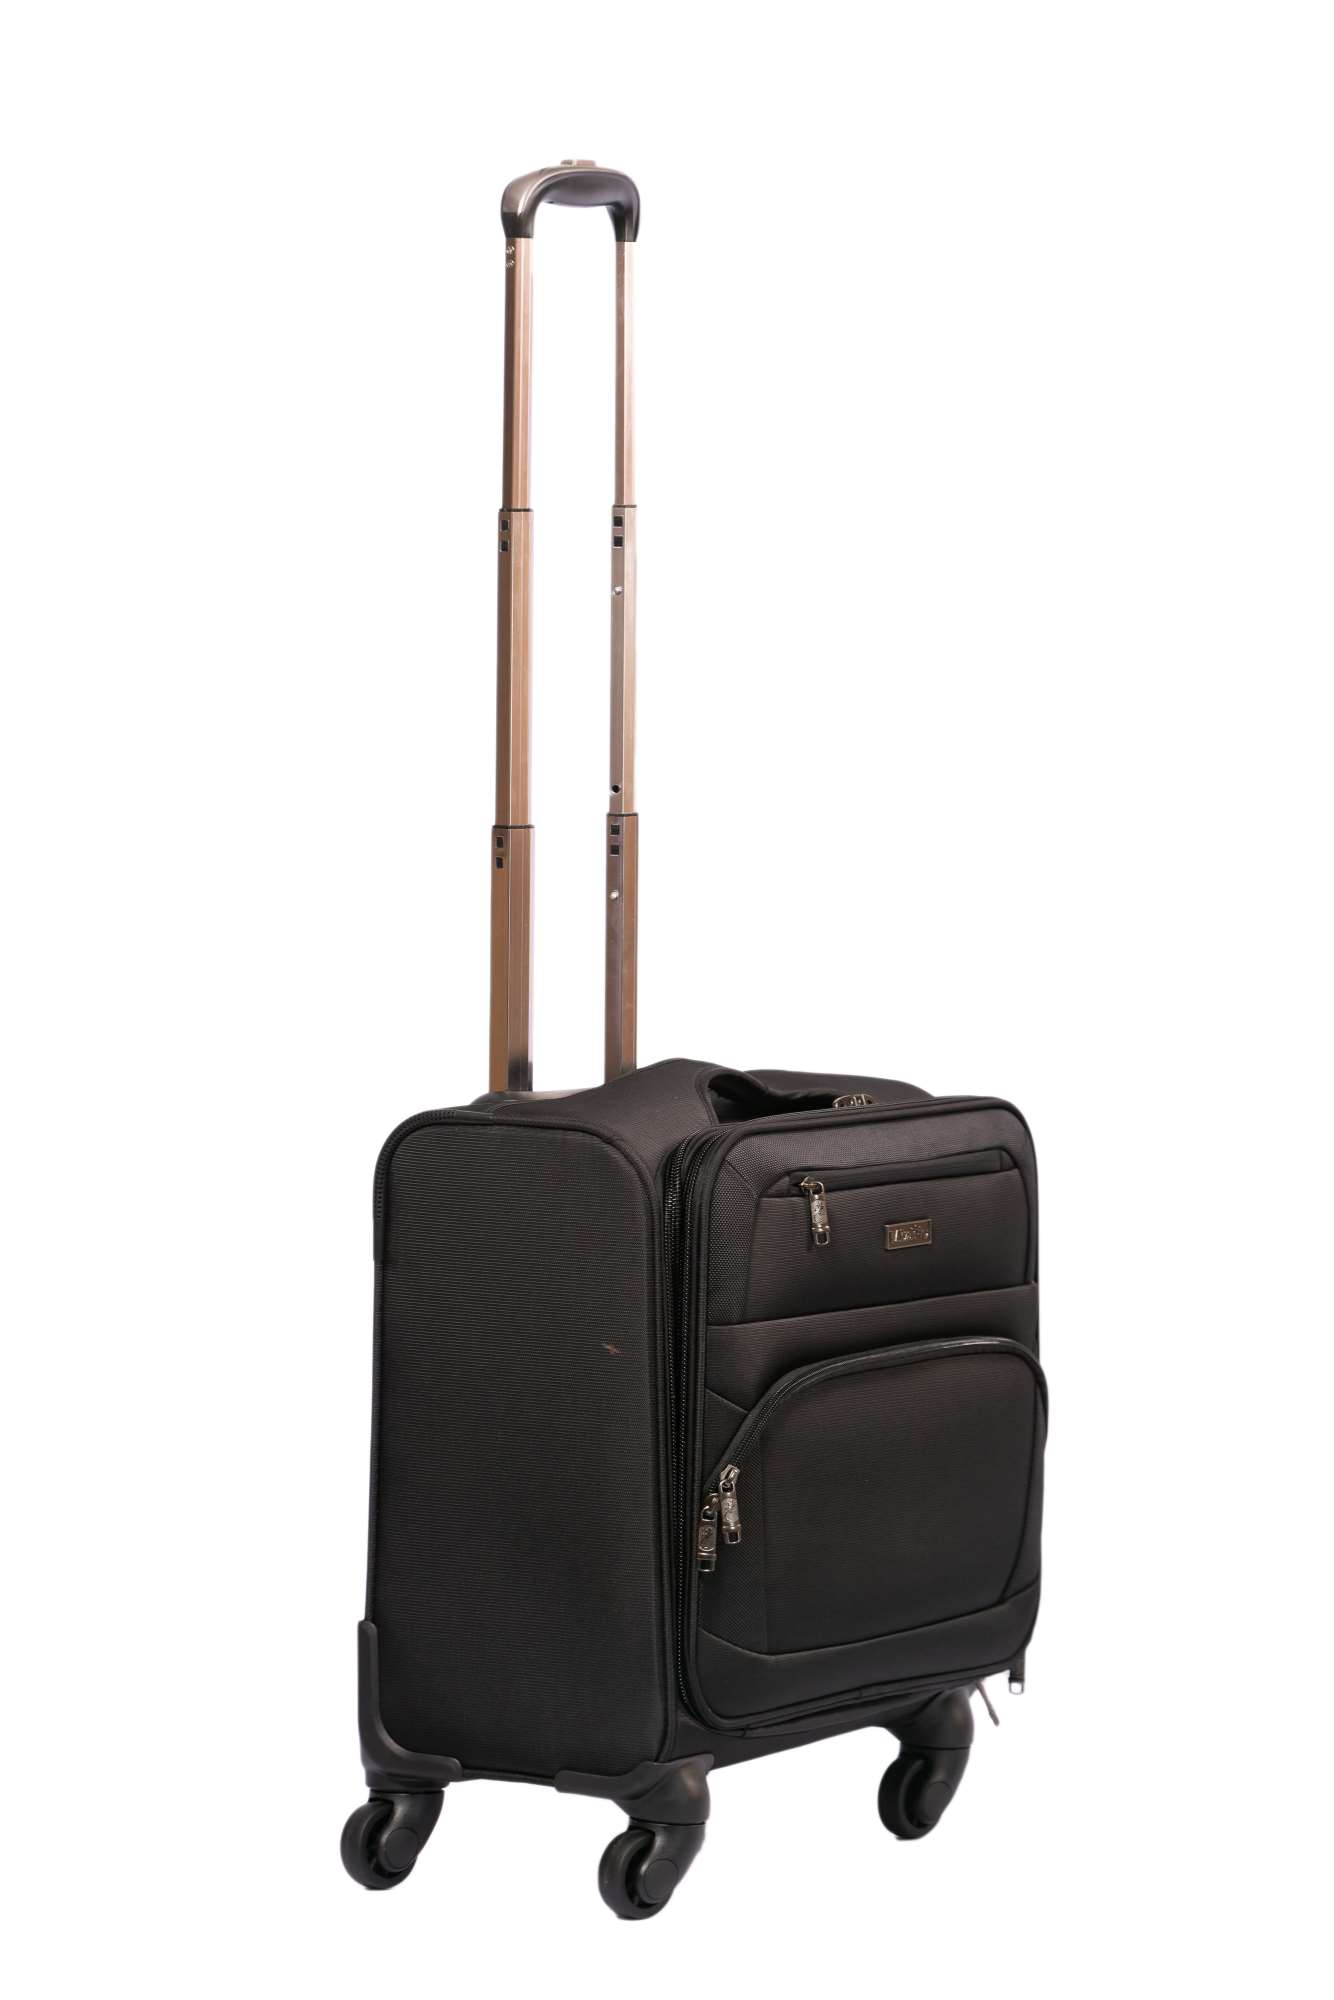 Alezar Lux Cabin Size Travel Bag Black 18"